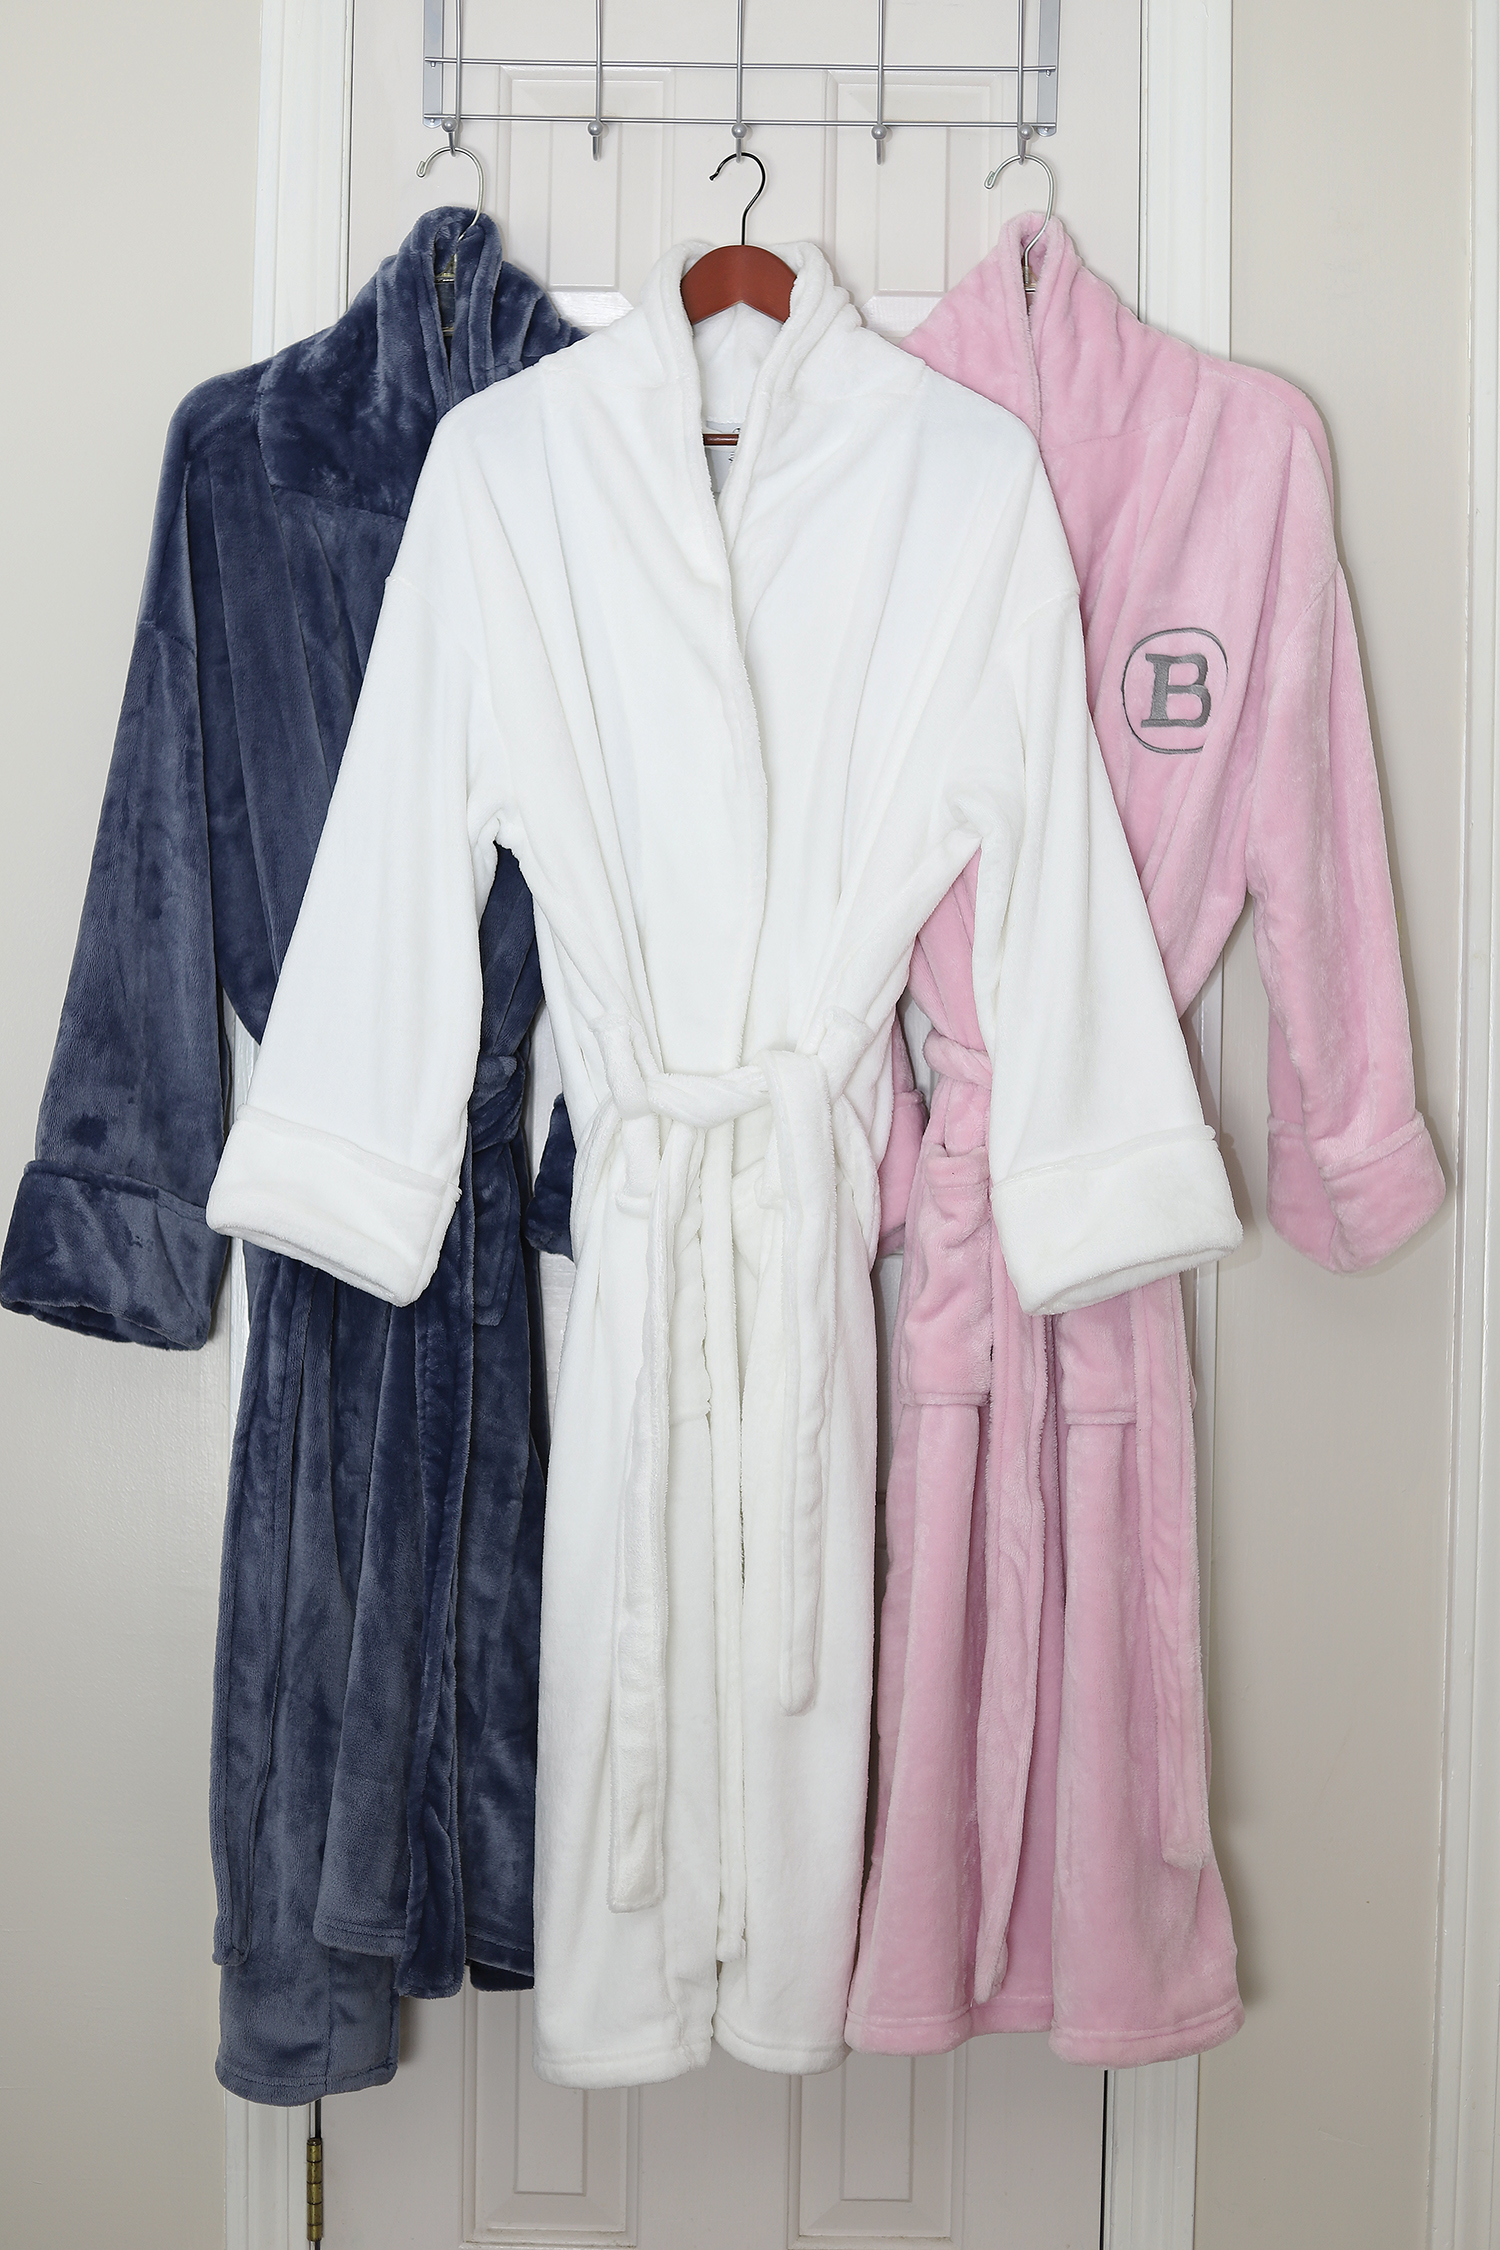 Luxury Bathrobes, Spa Robe